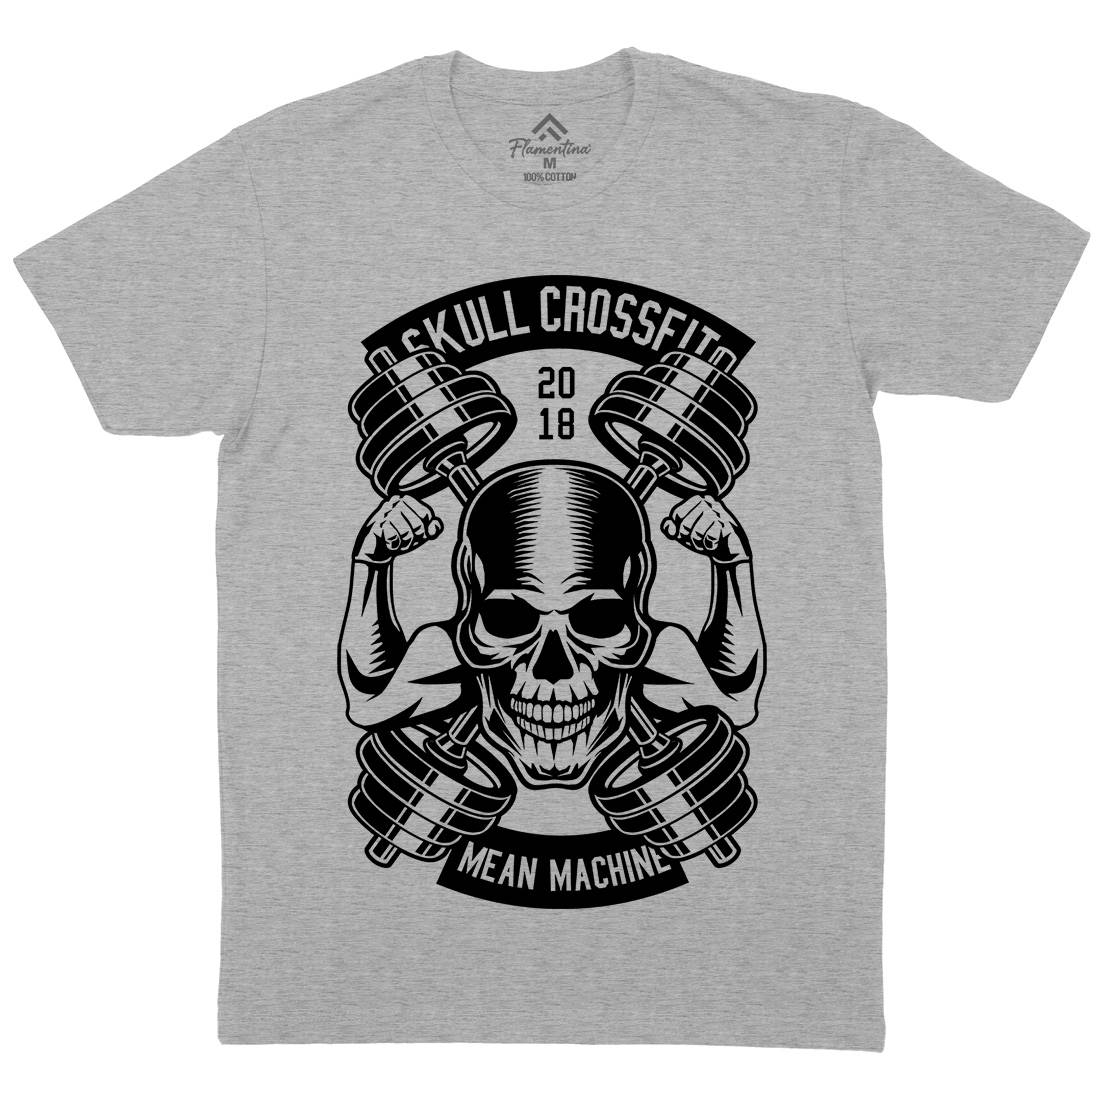 Skull Cross Fit Mens Organic Crew Neck T-Shirt Gym B627